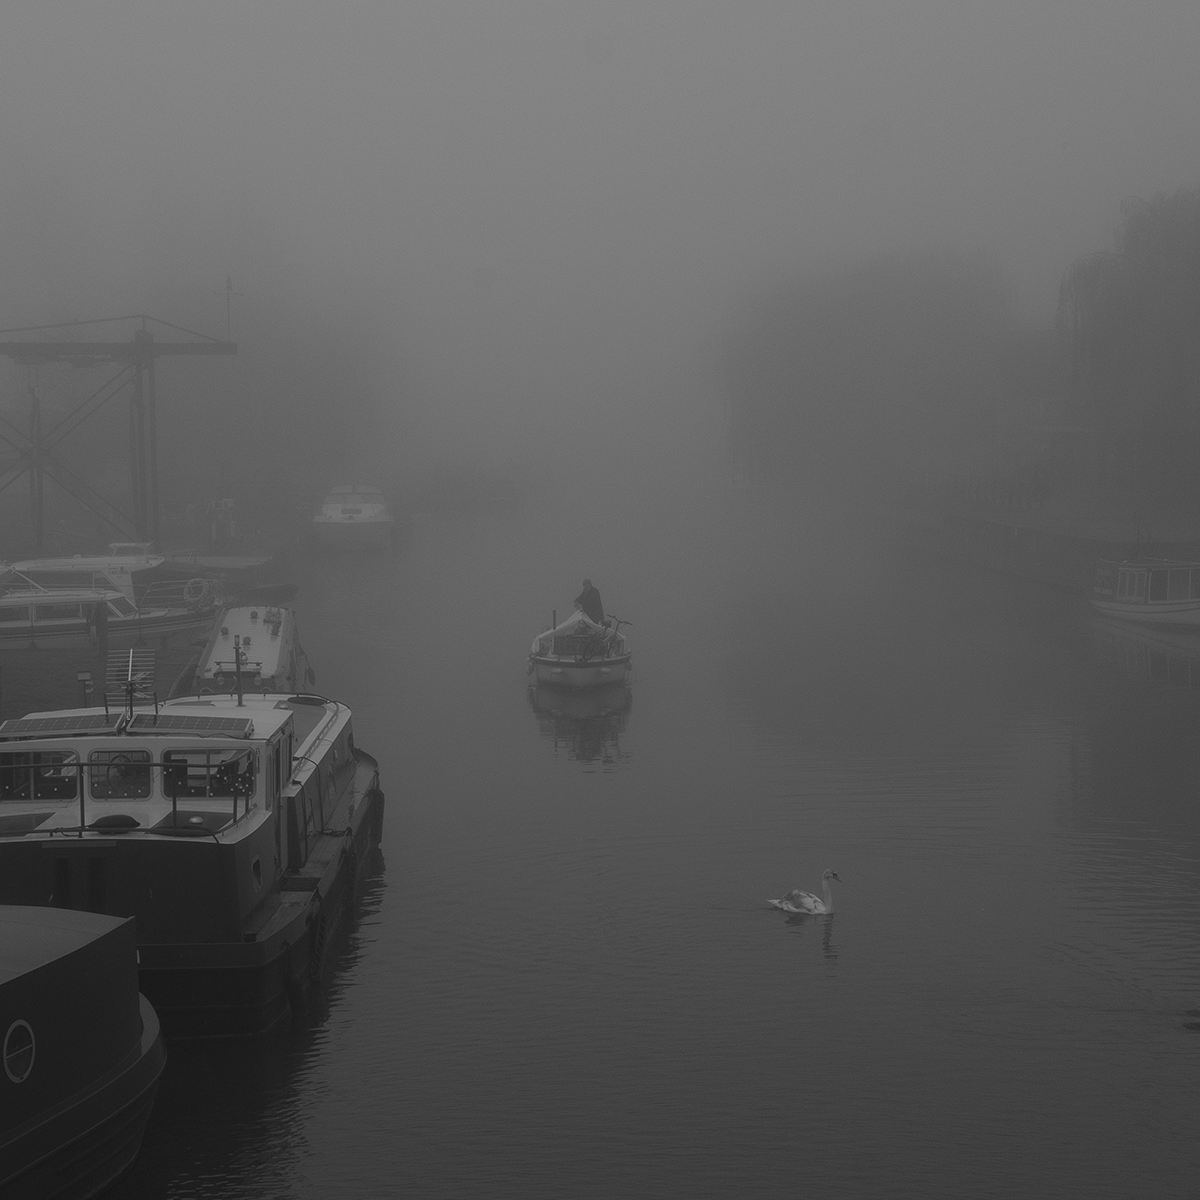 Boat on the River in Mist I link image